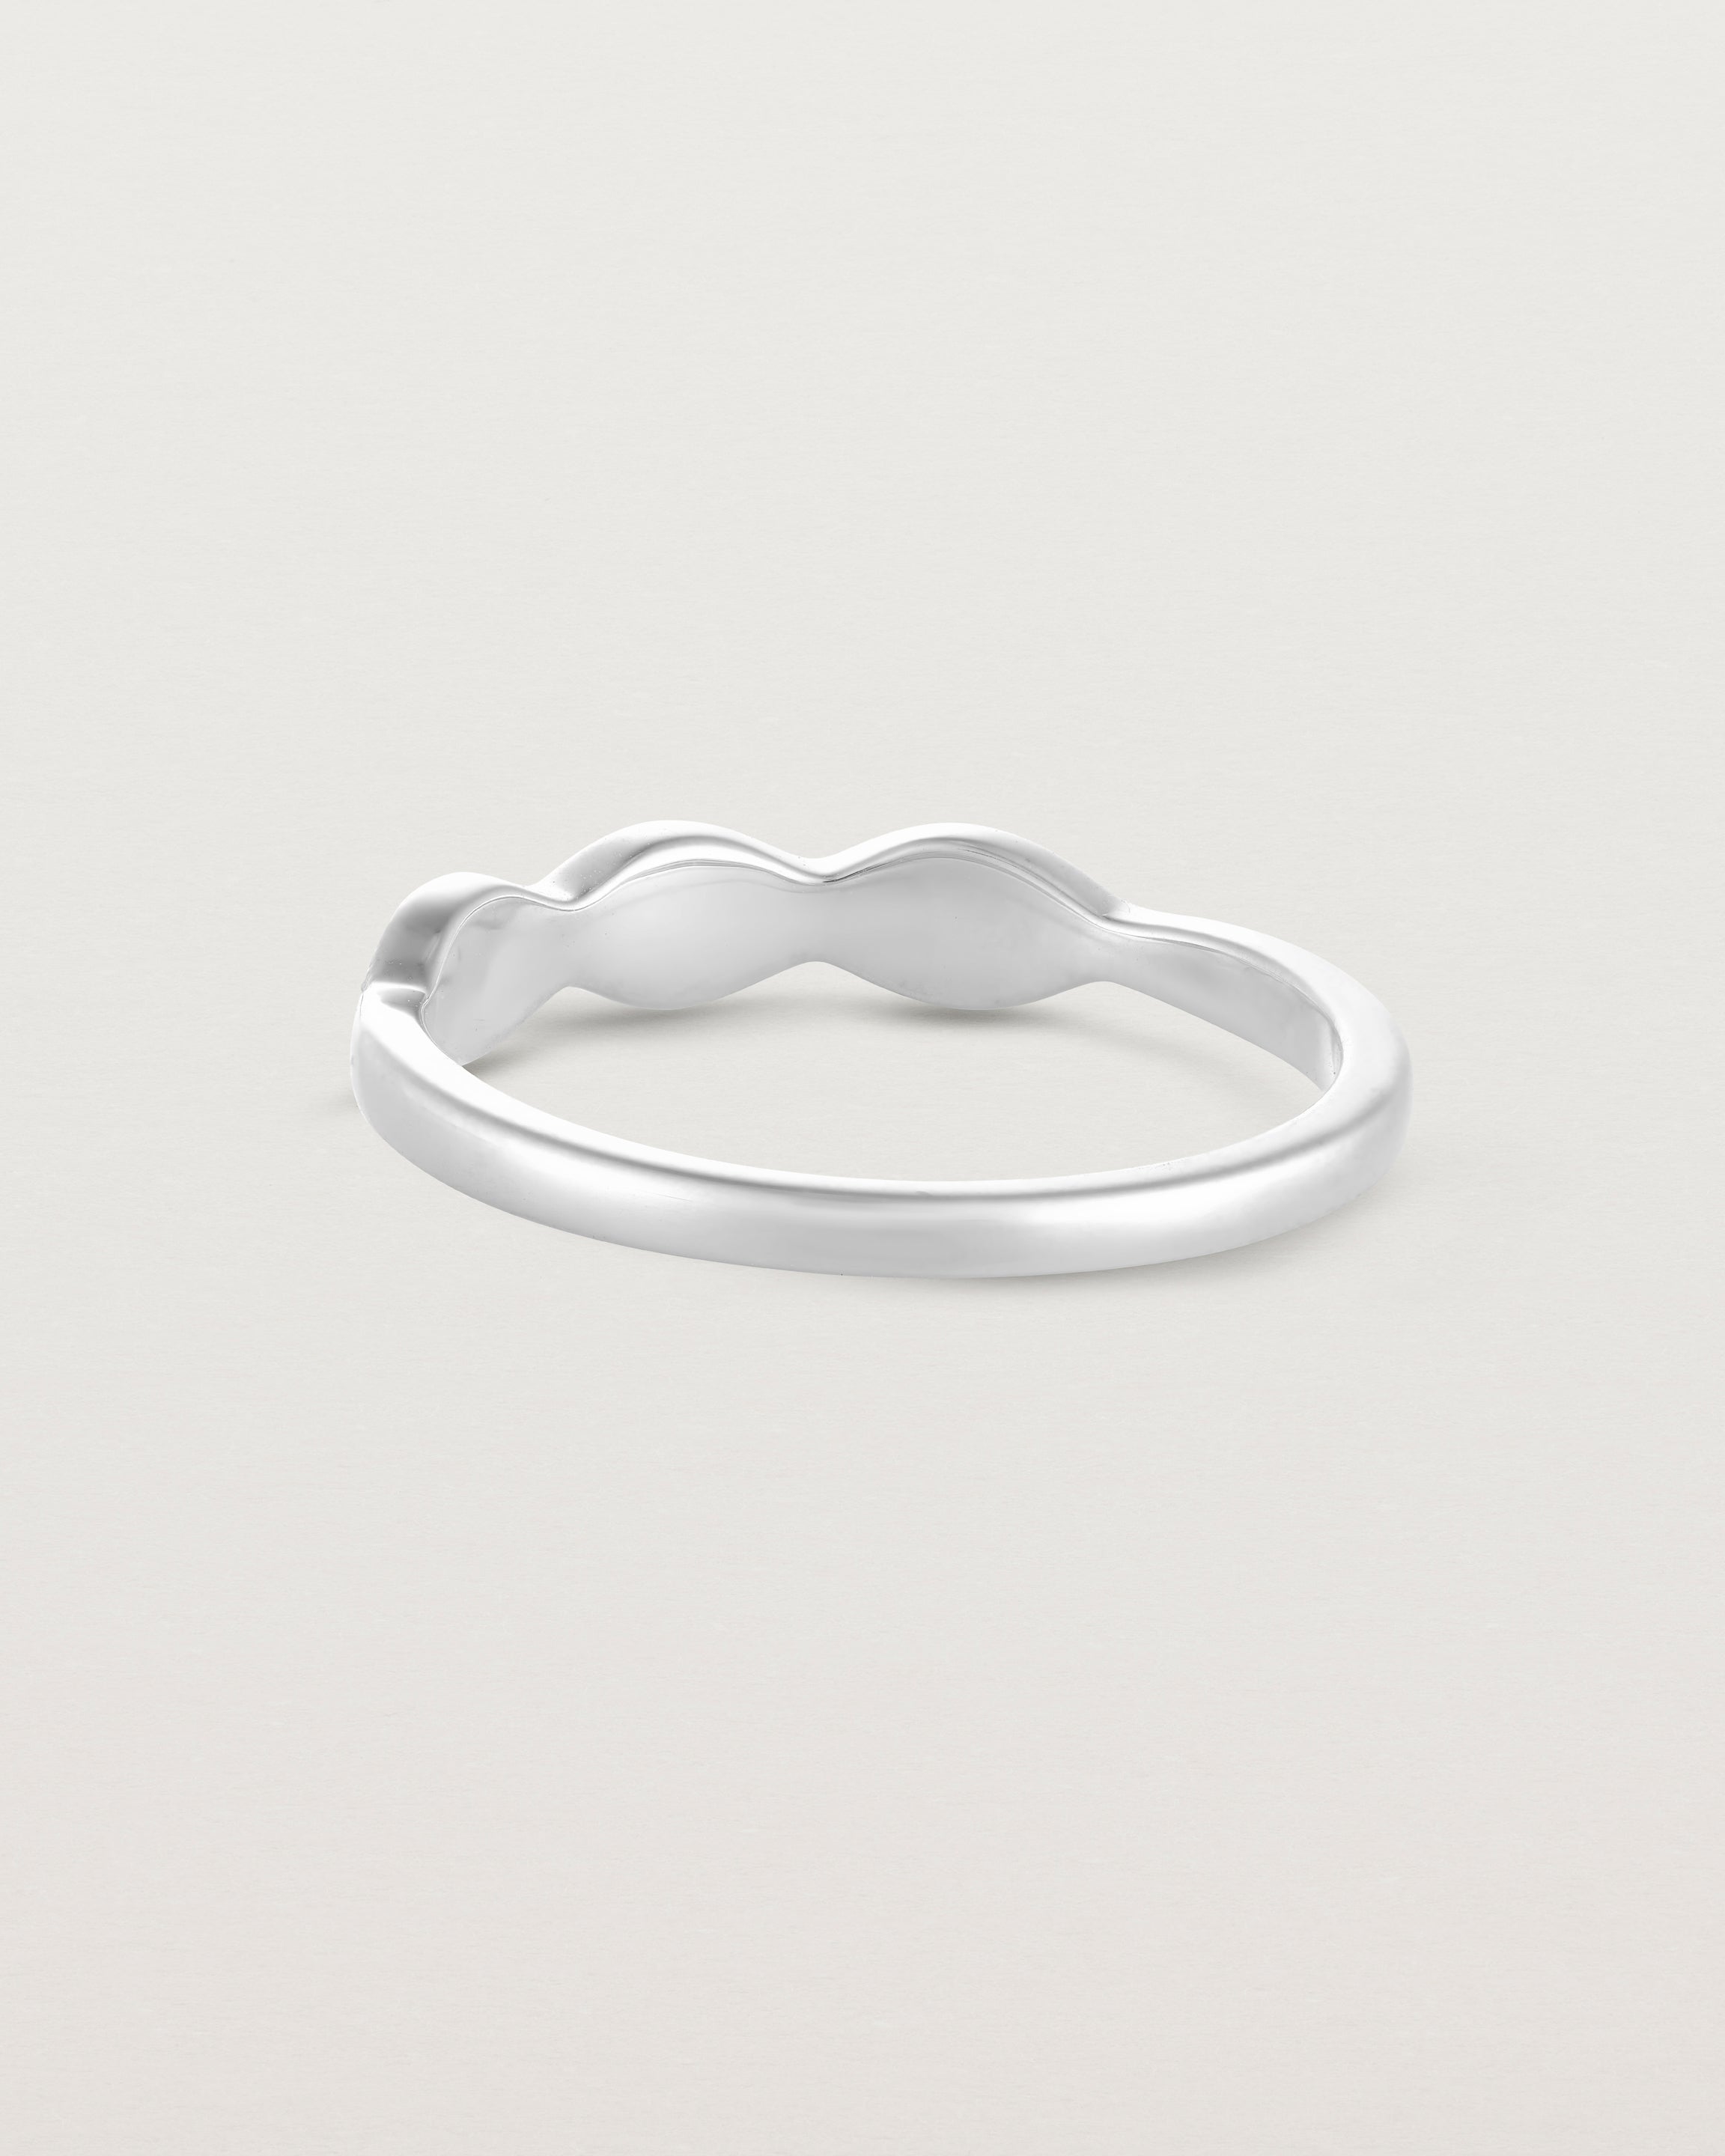 Nessa Ring | Vintage Inspired